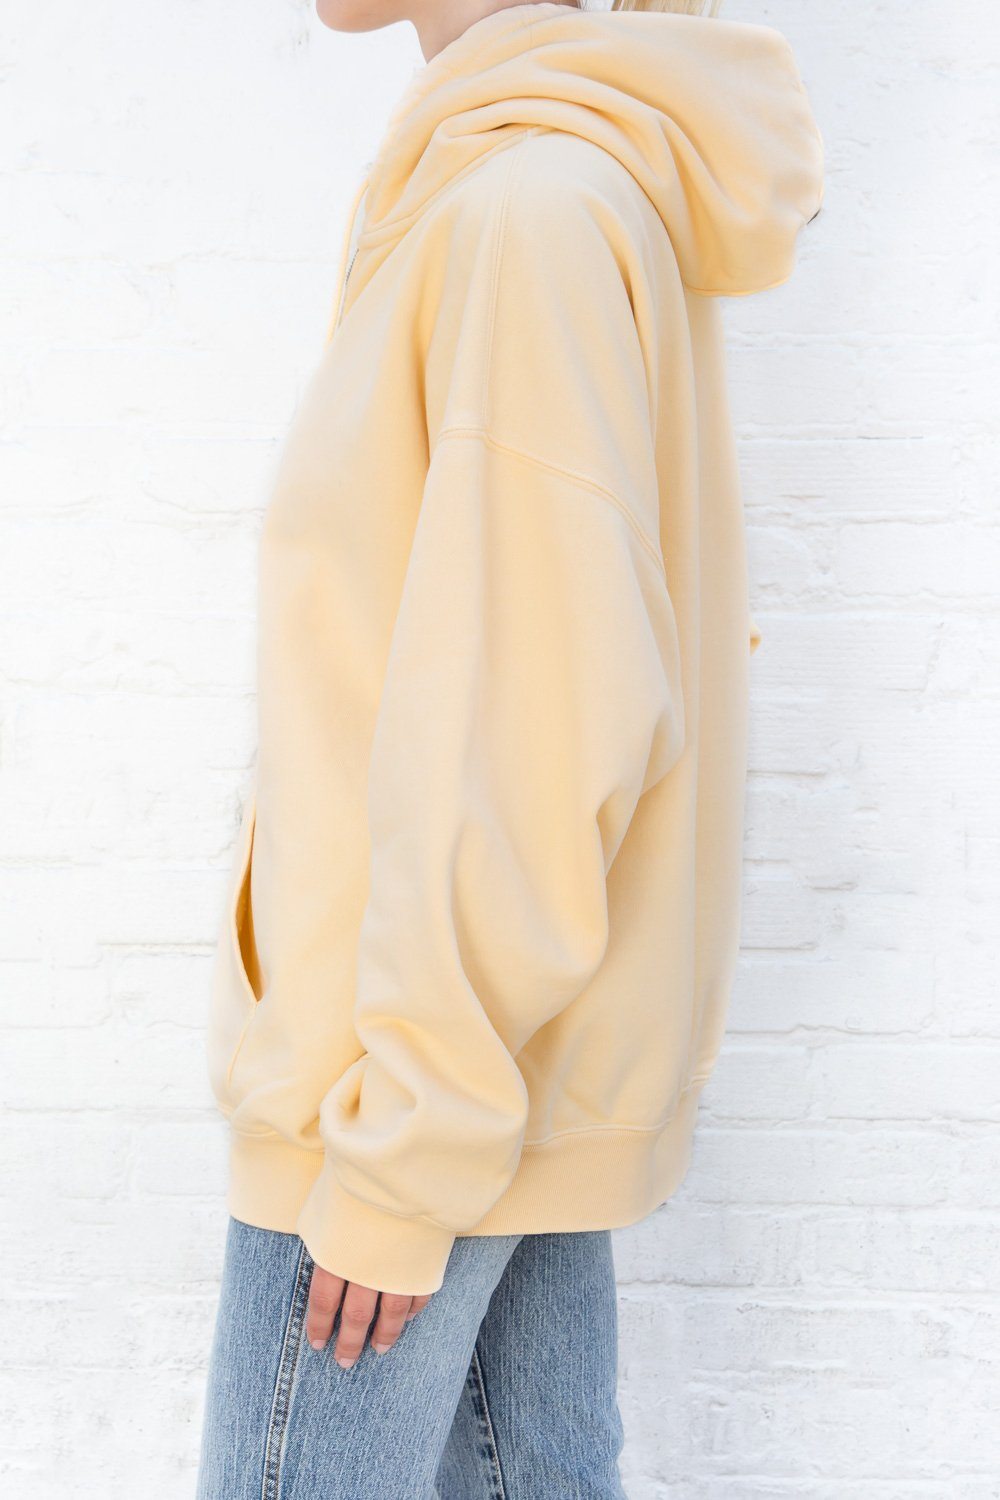 Brandy Melville John Galt Krissy Light Yellow Cotton Zip Jacket Hood One  Size